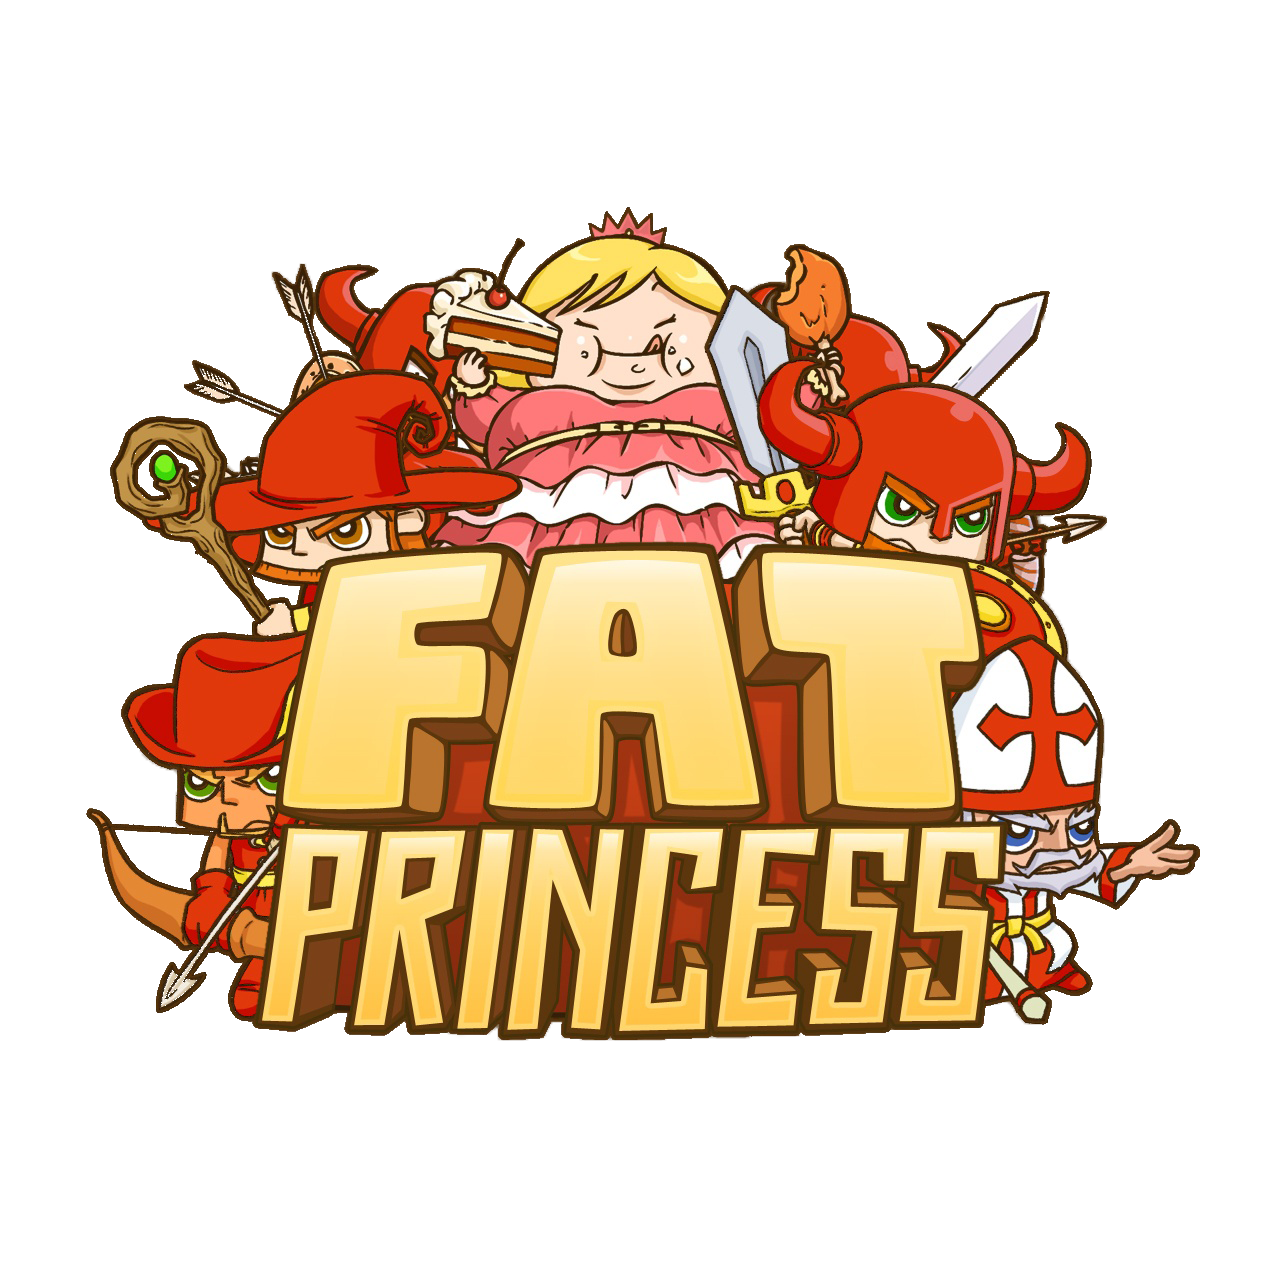 Image of Fat Princess